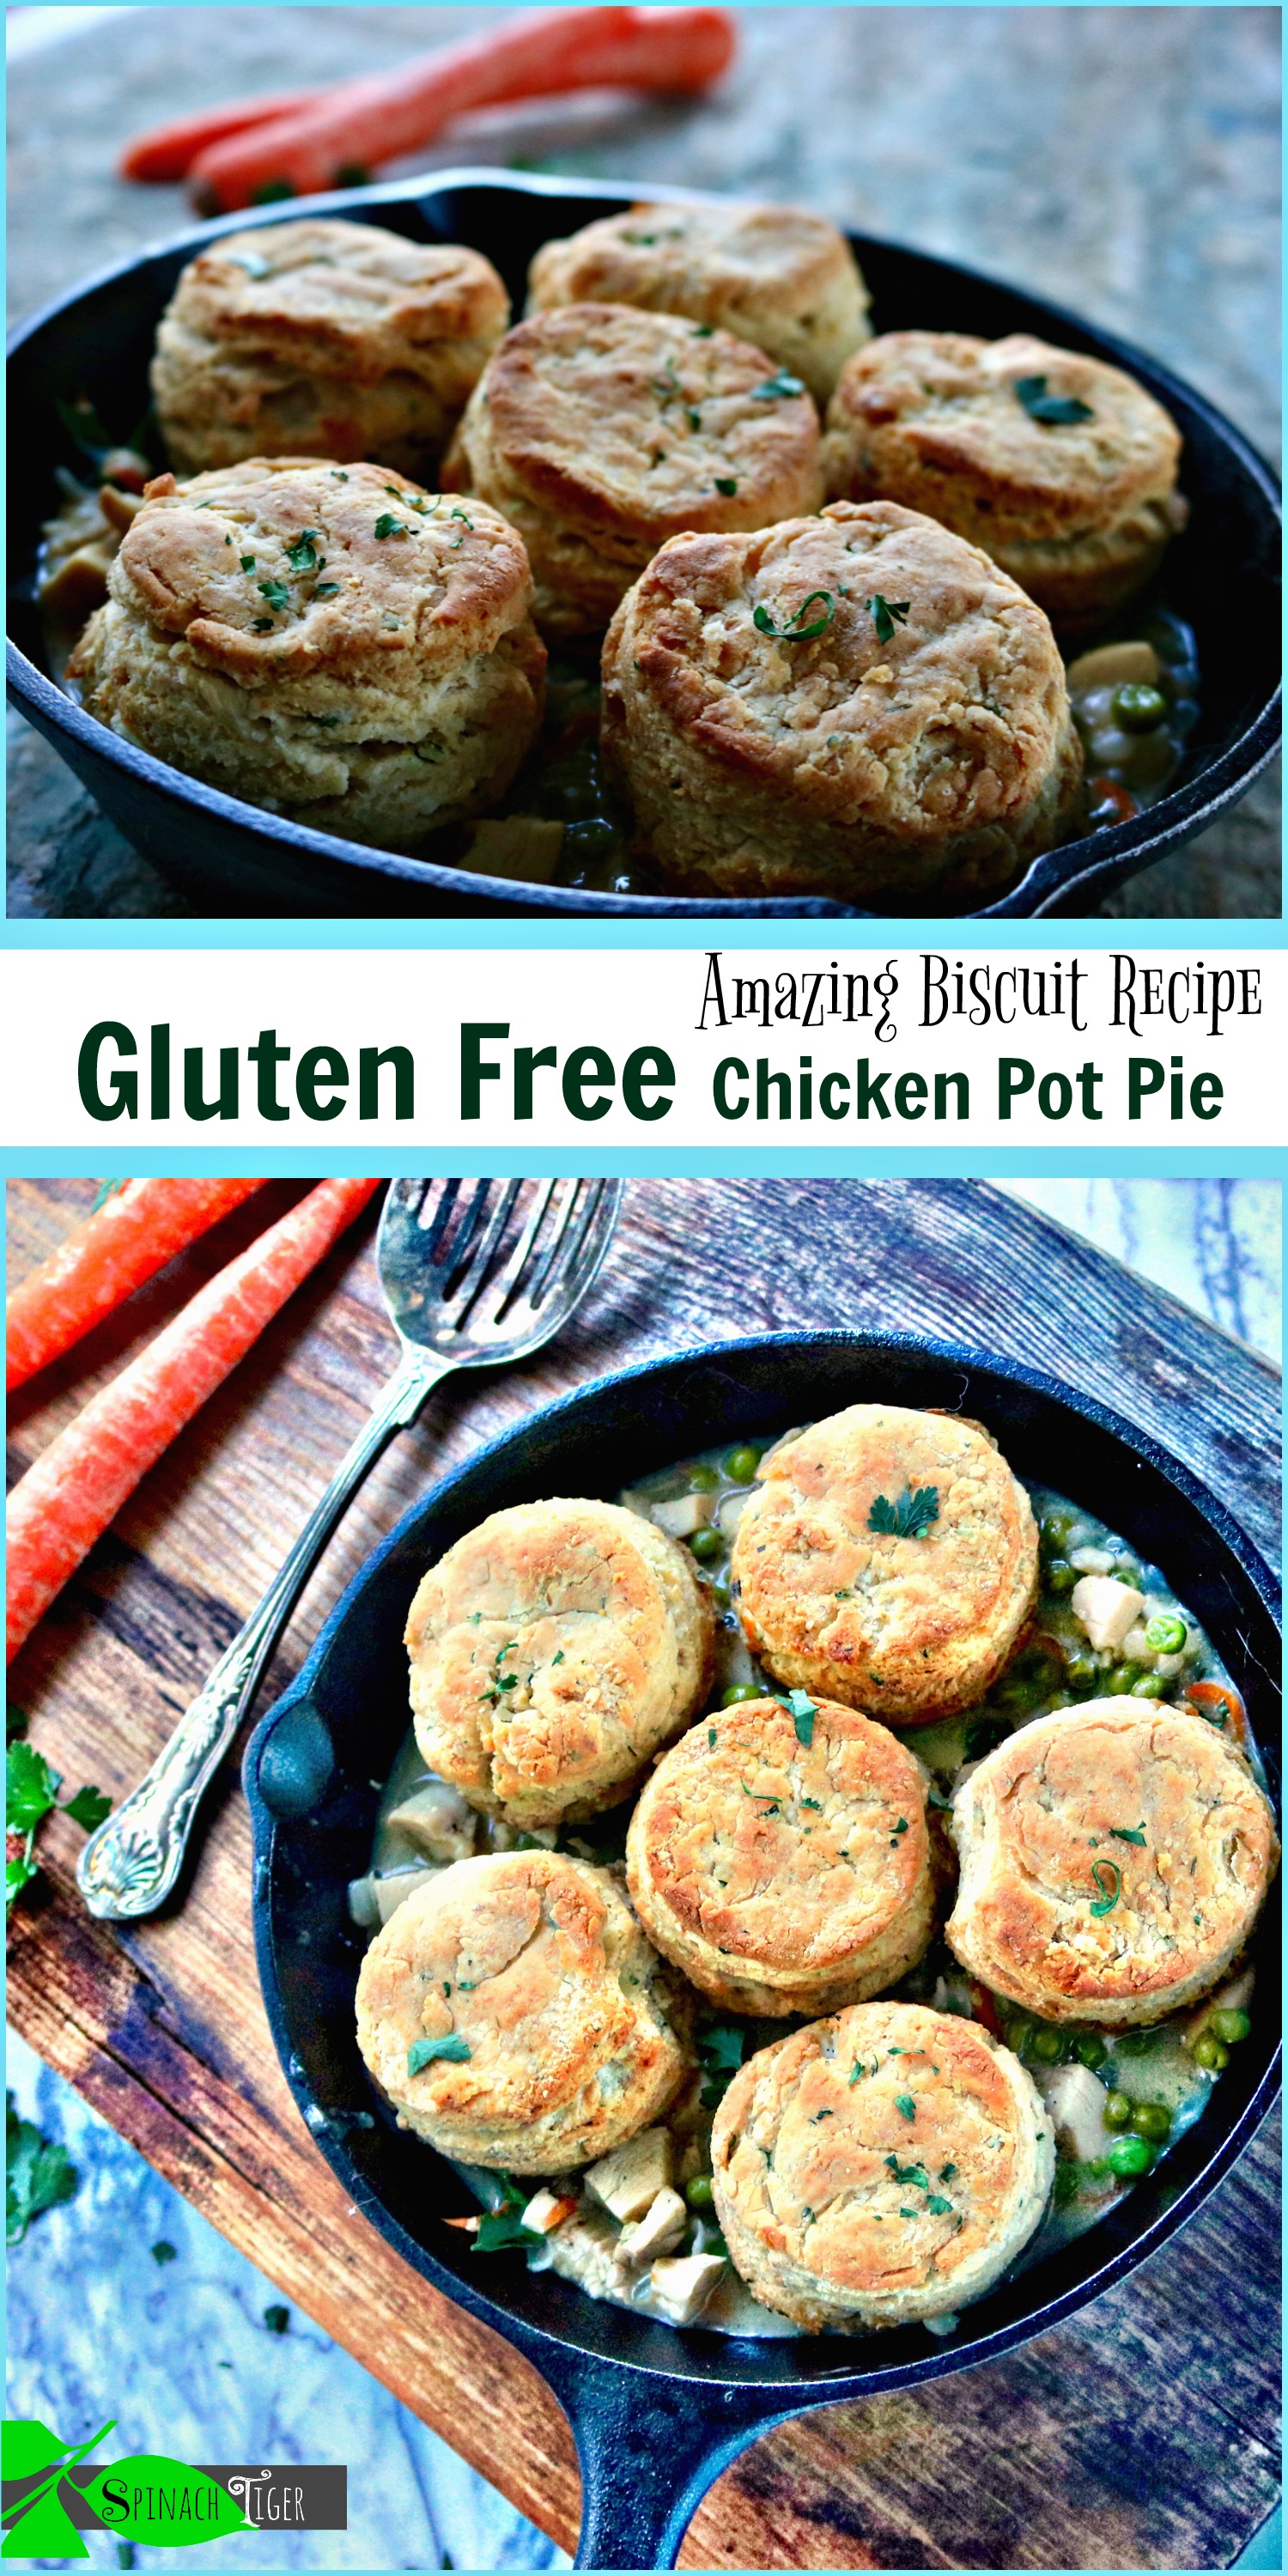 The Best Gluten Free Chicken Pot Pie with Biscuits from Spinach Tiger